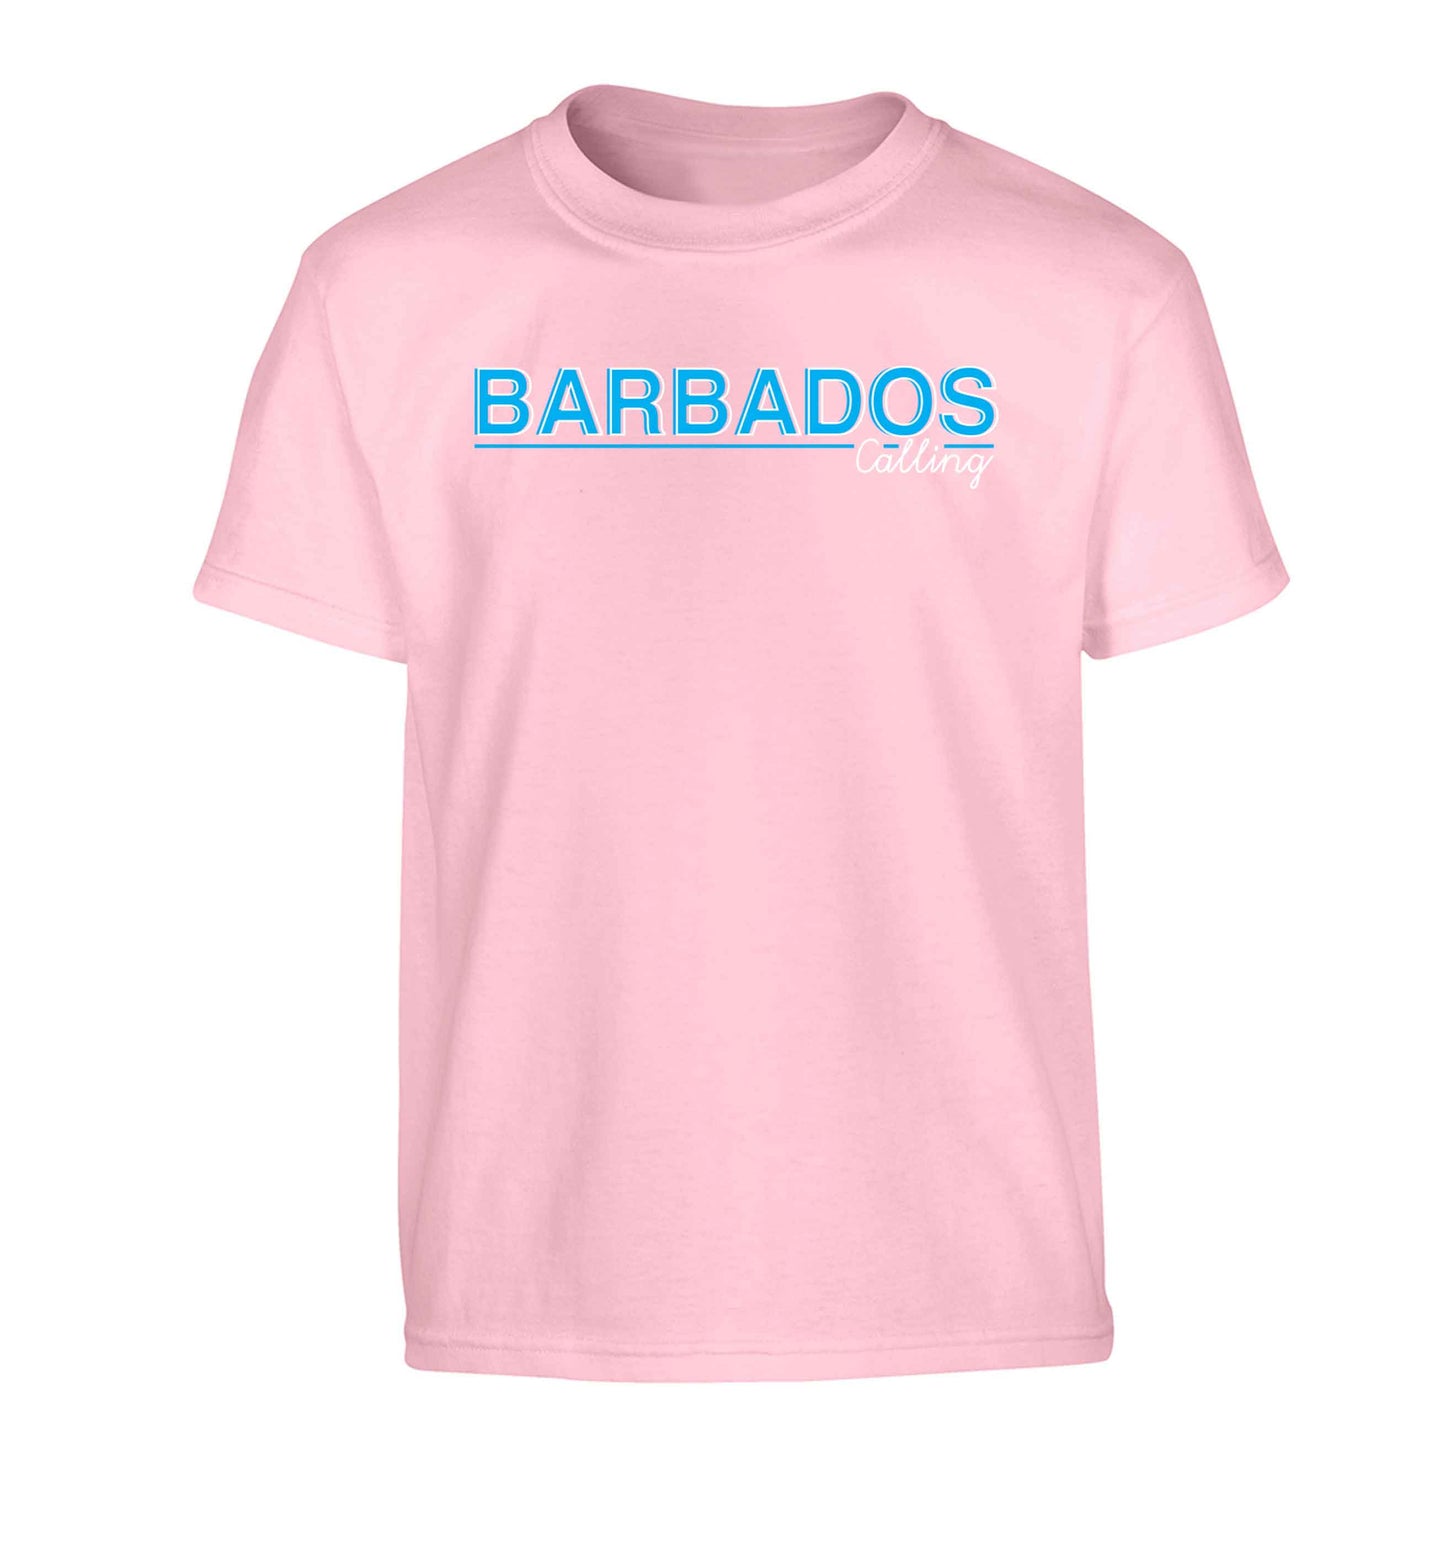 Barbados calling Children's light pink Tshirt 12-13 Years